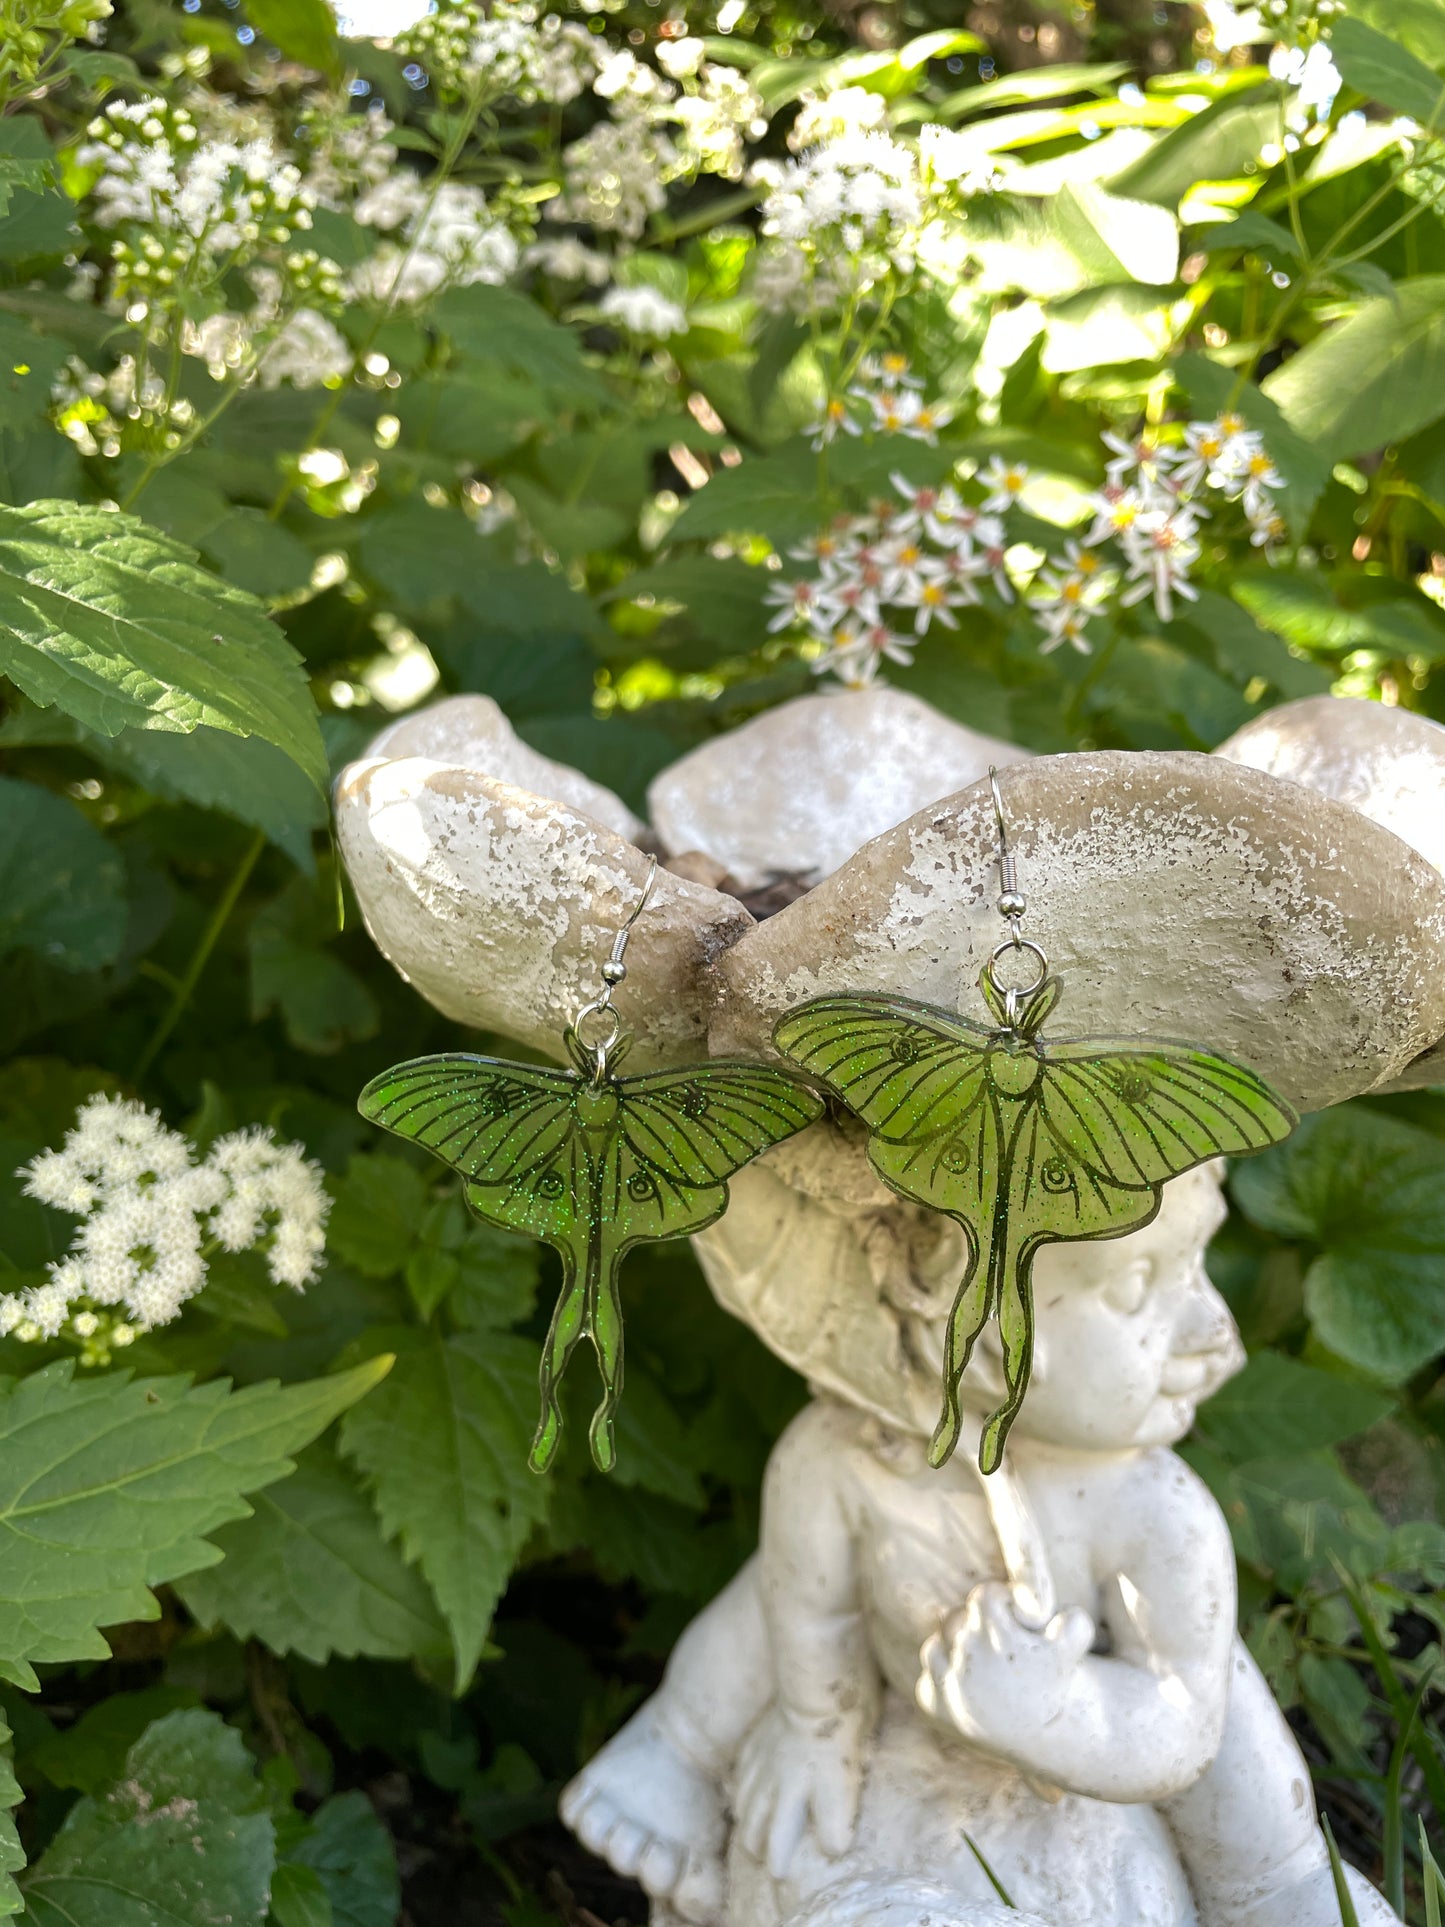 Green luna moth earrings hanging on a garden ornament.